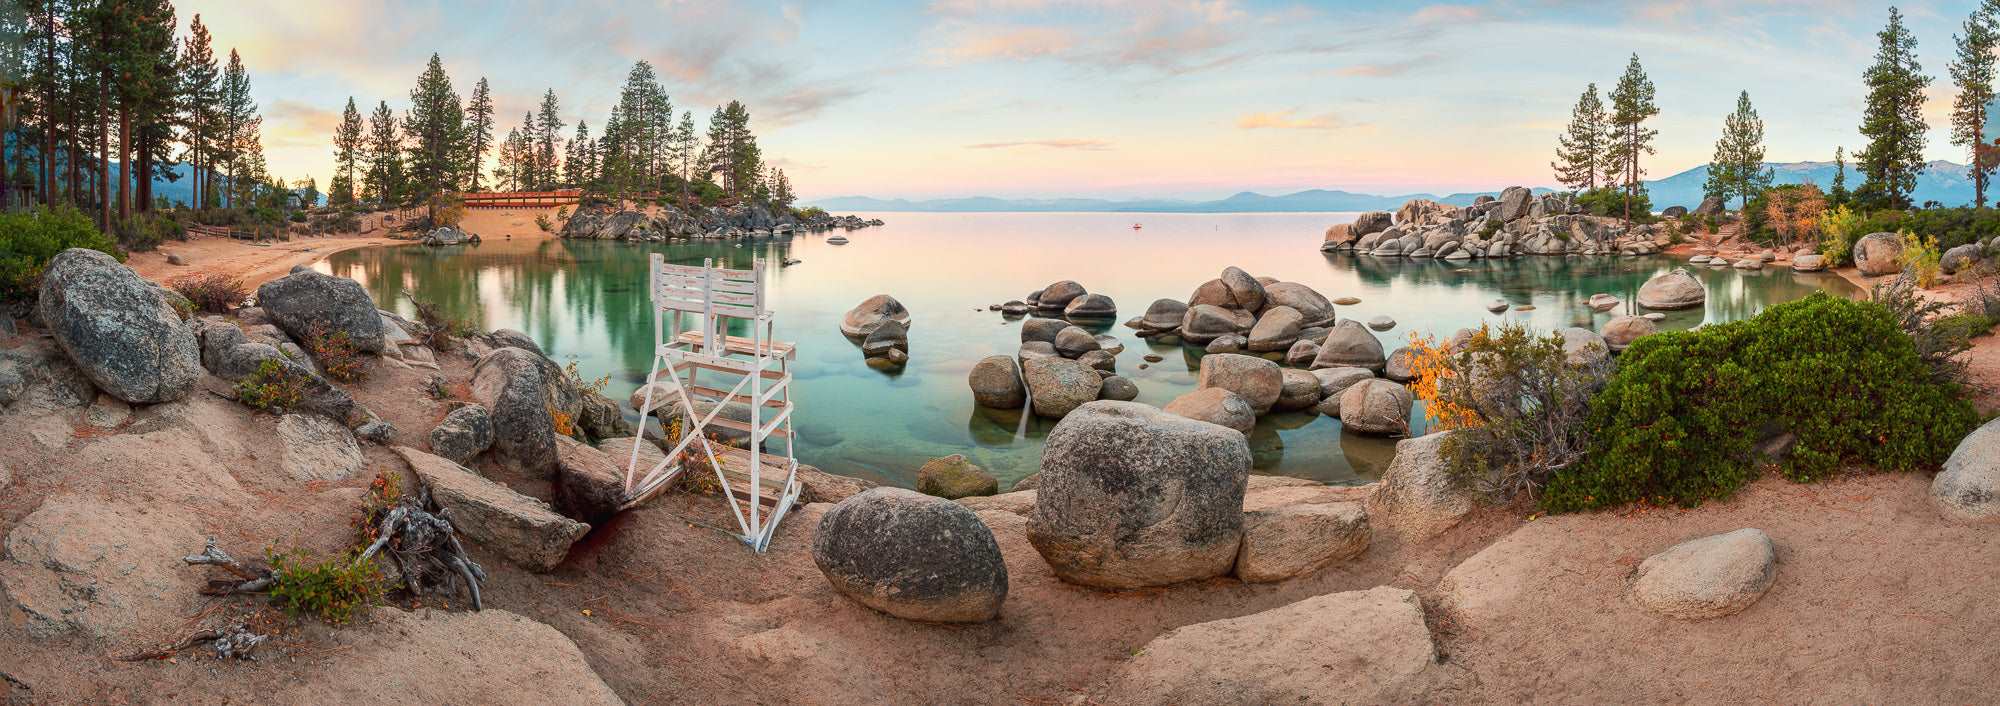 Lake Tahoe Serenity's Watch: Sunrise Over Sand Harbour - Stephen Milner